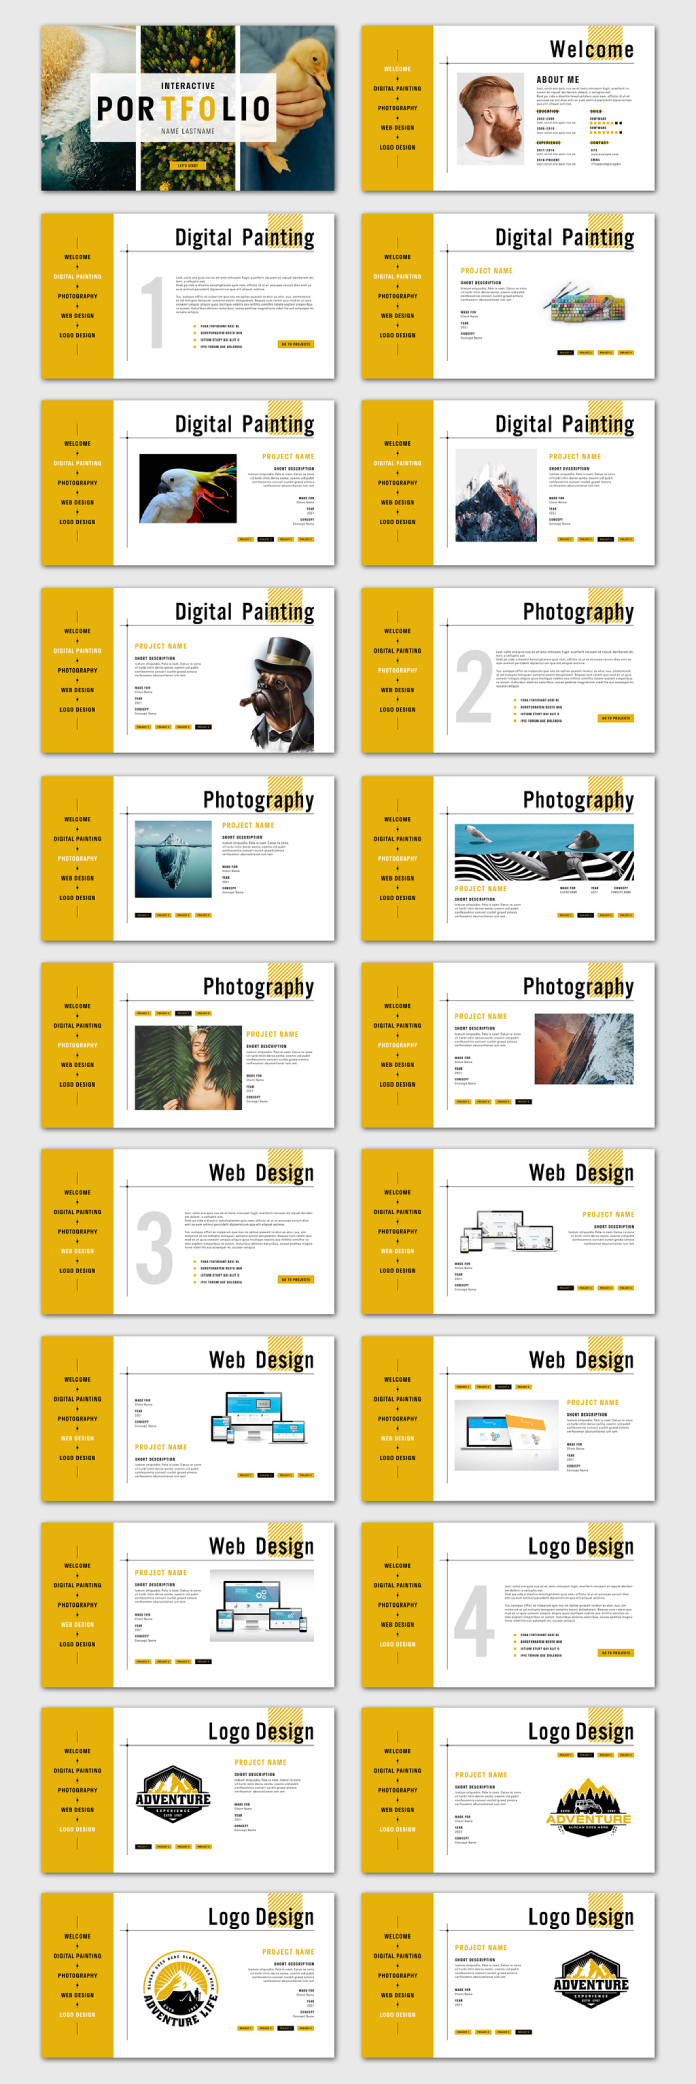 Interactive Portfolio Template for Adobe InDesign